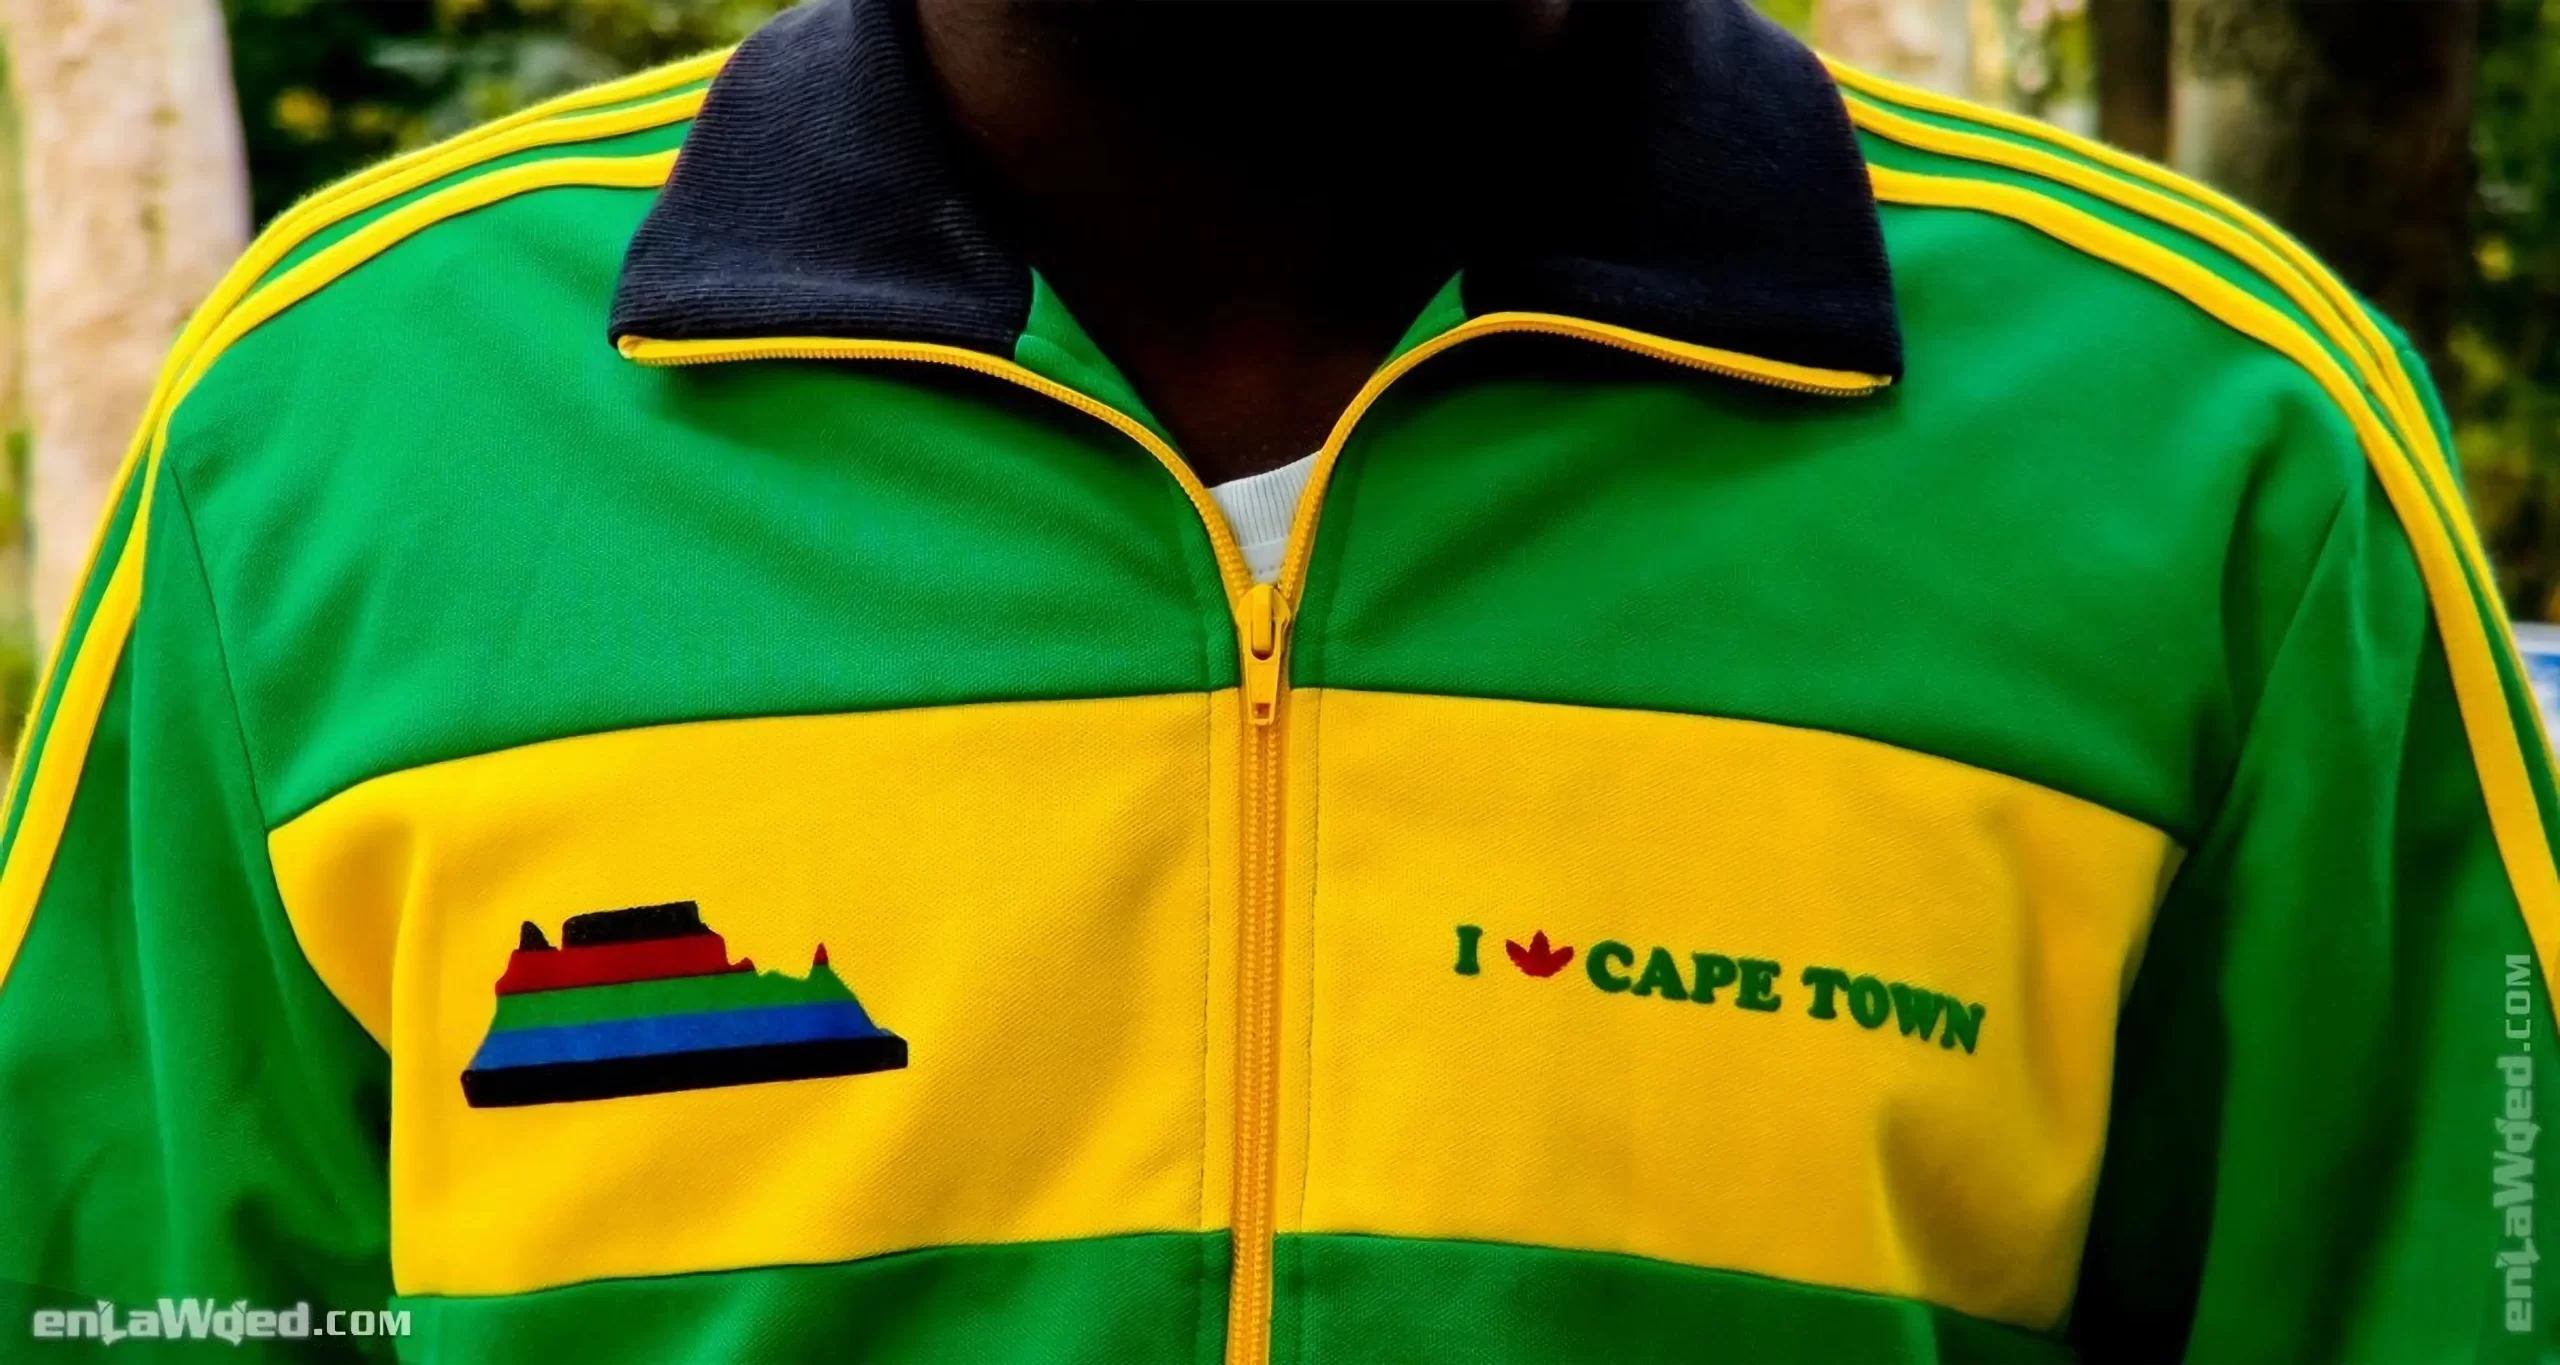 Men’s 2006 Cape Town TT by Adidas Originals: Passionate (EnLawded.com file #lmchk90458ip2y122274kg9st)